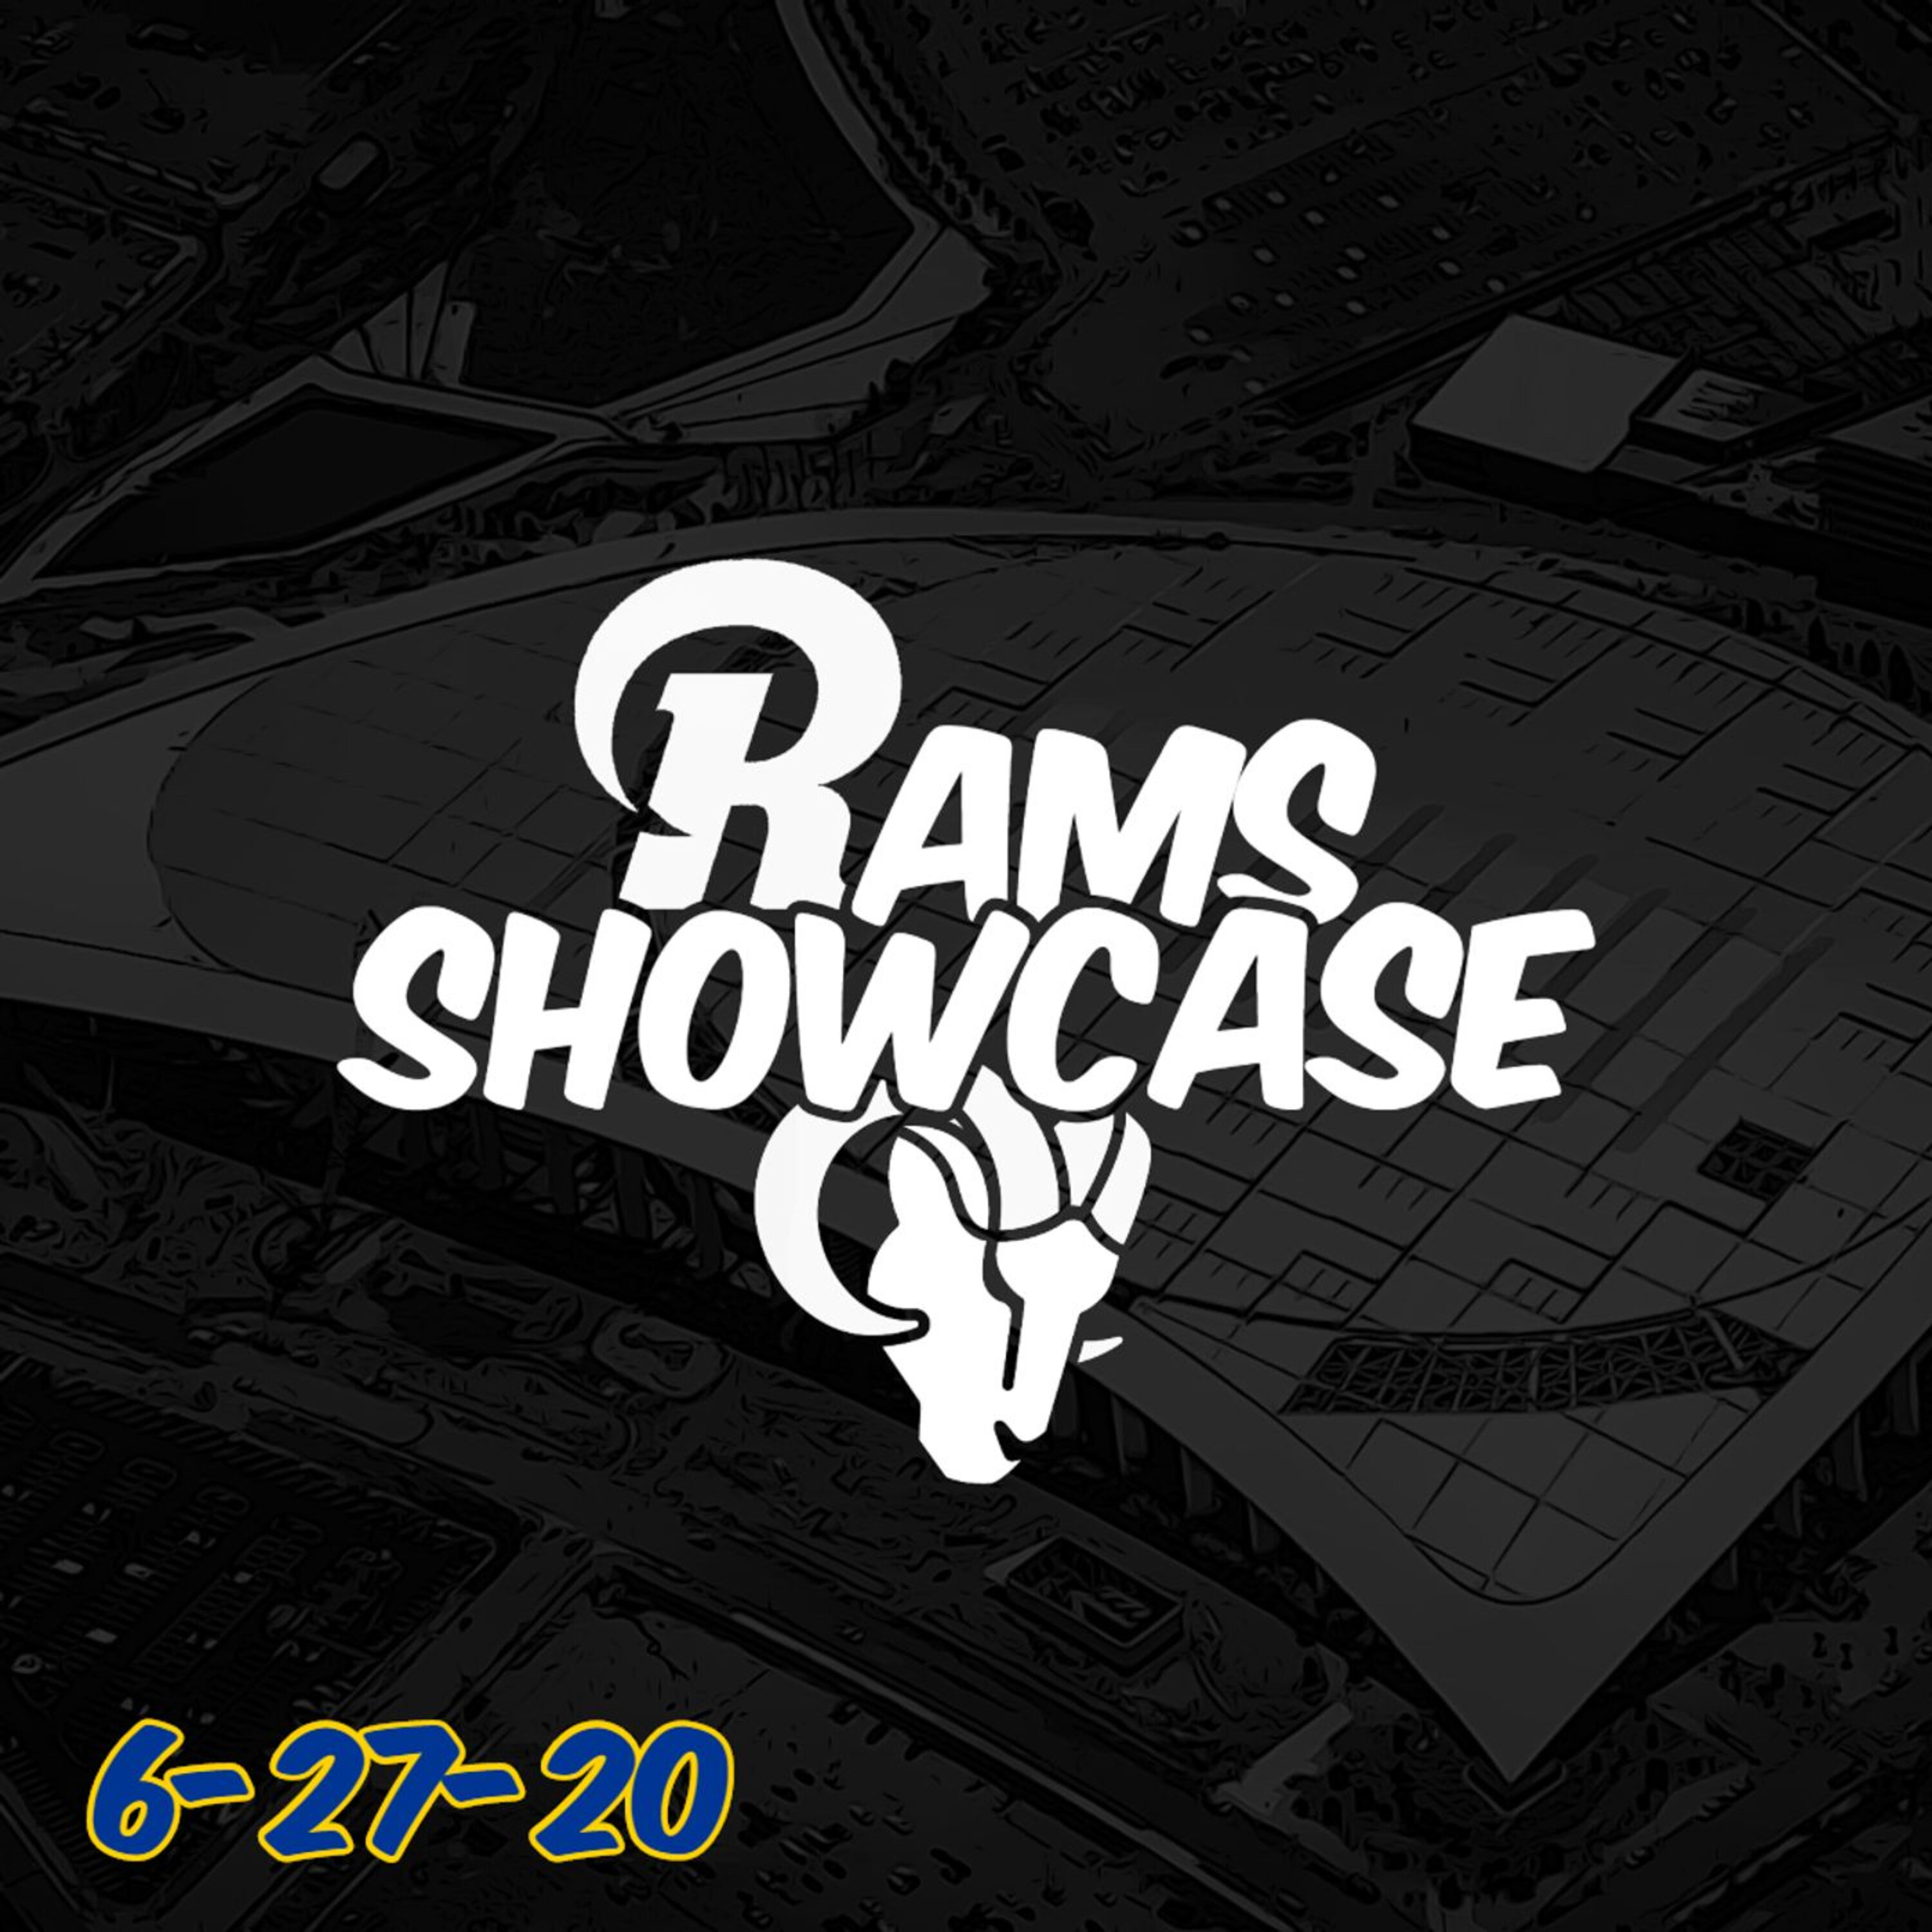 Rams Showcase - 6-27-20